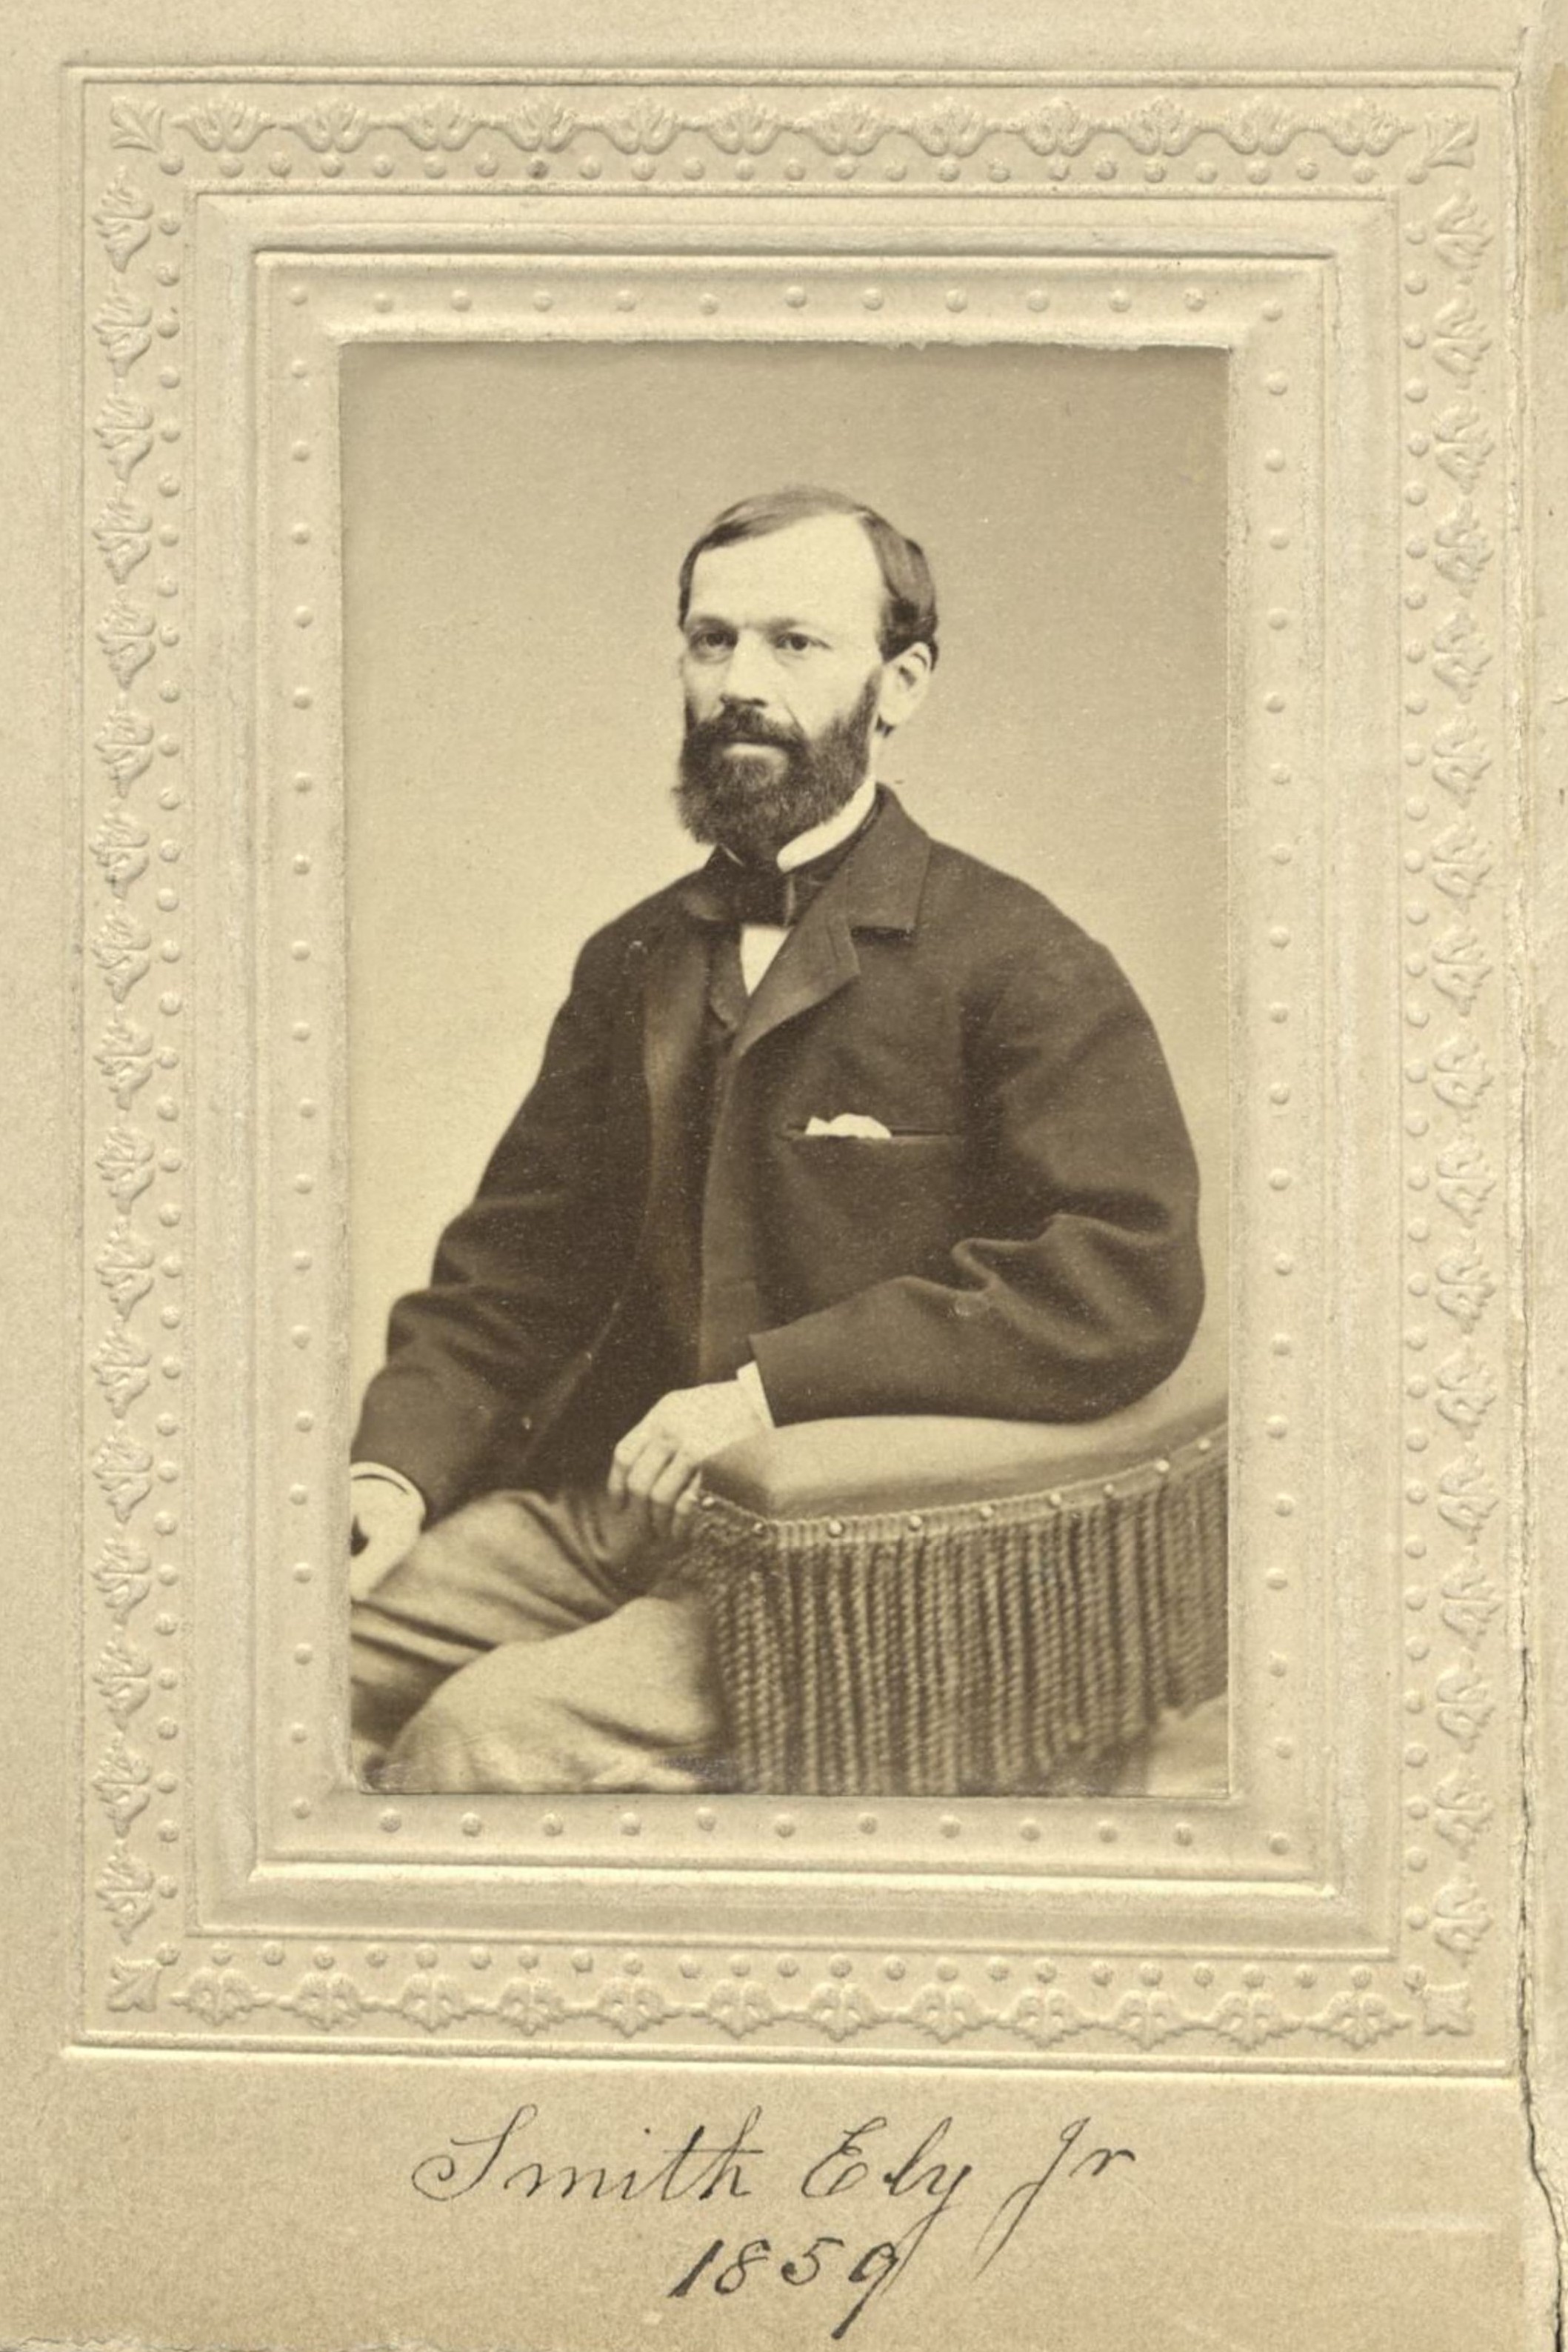 Member portrait of Smith Ely Jr.